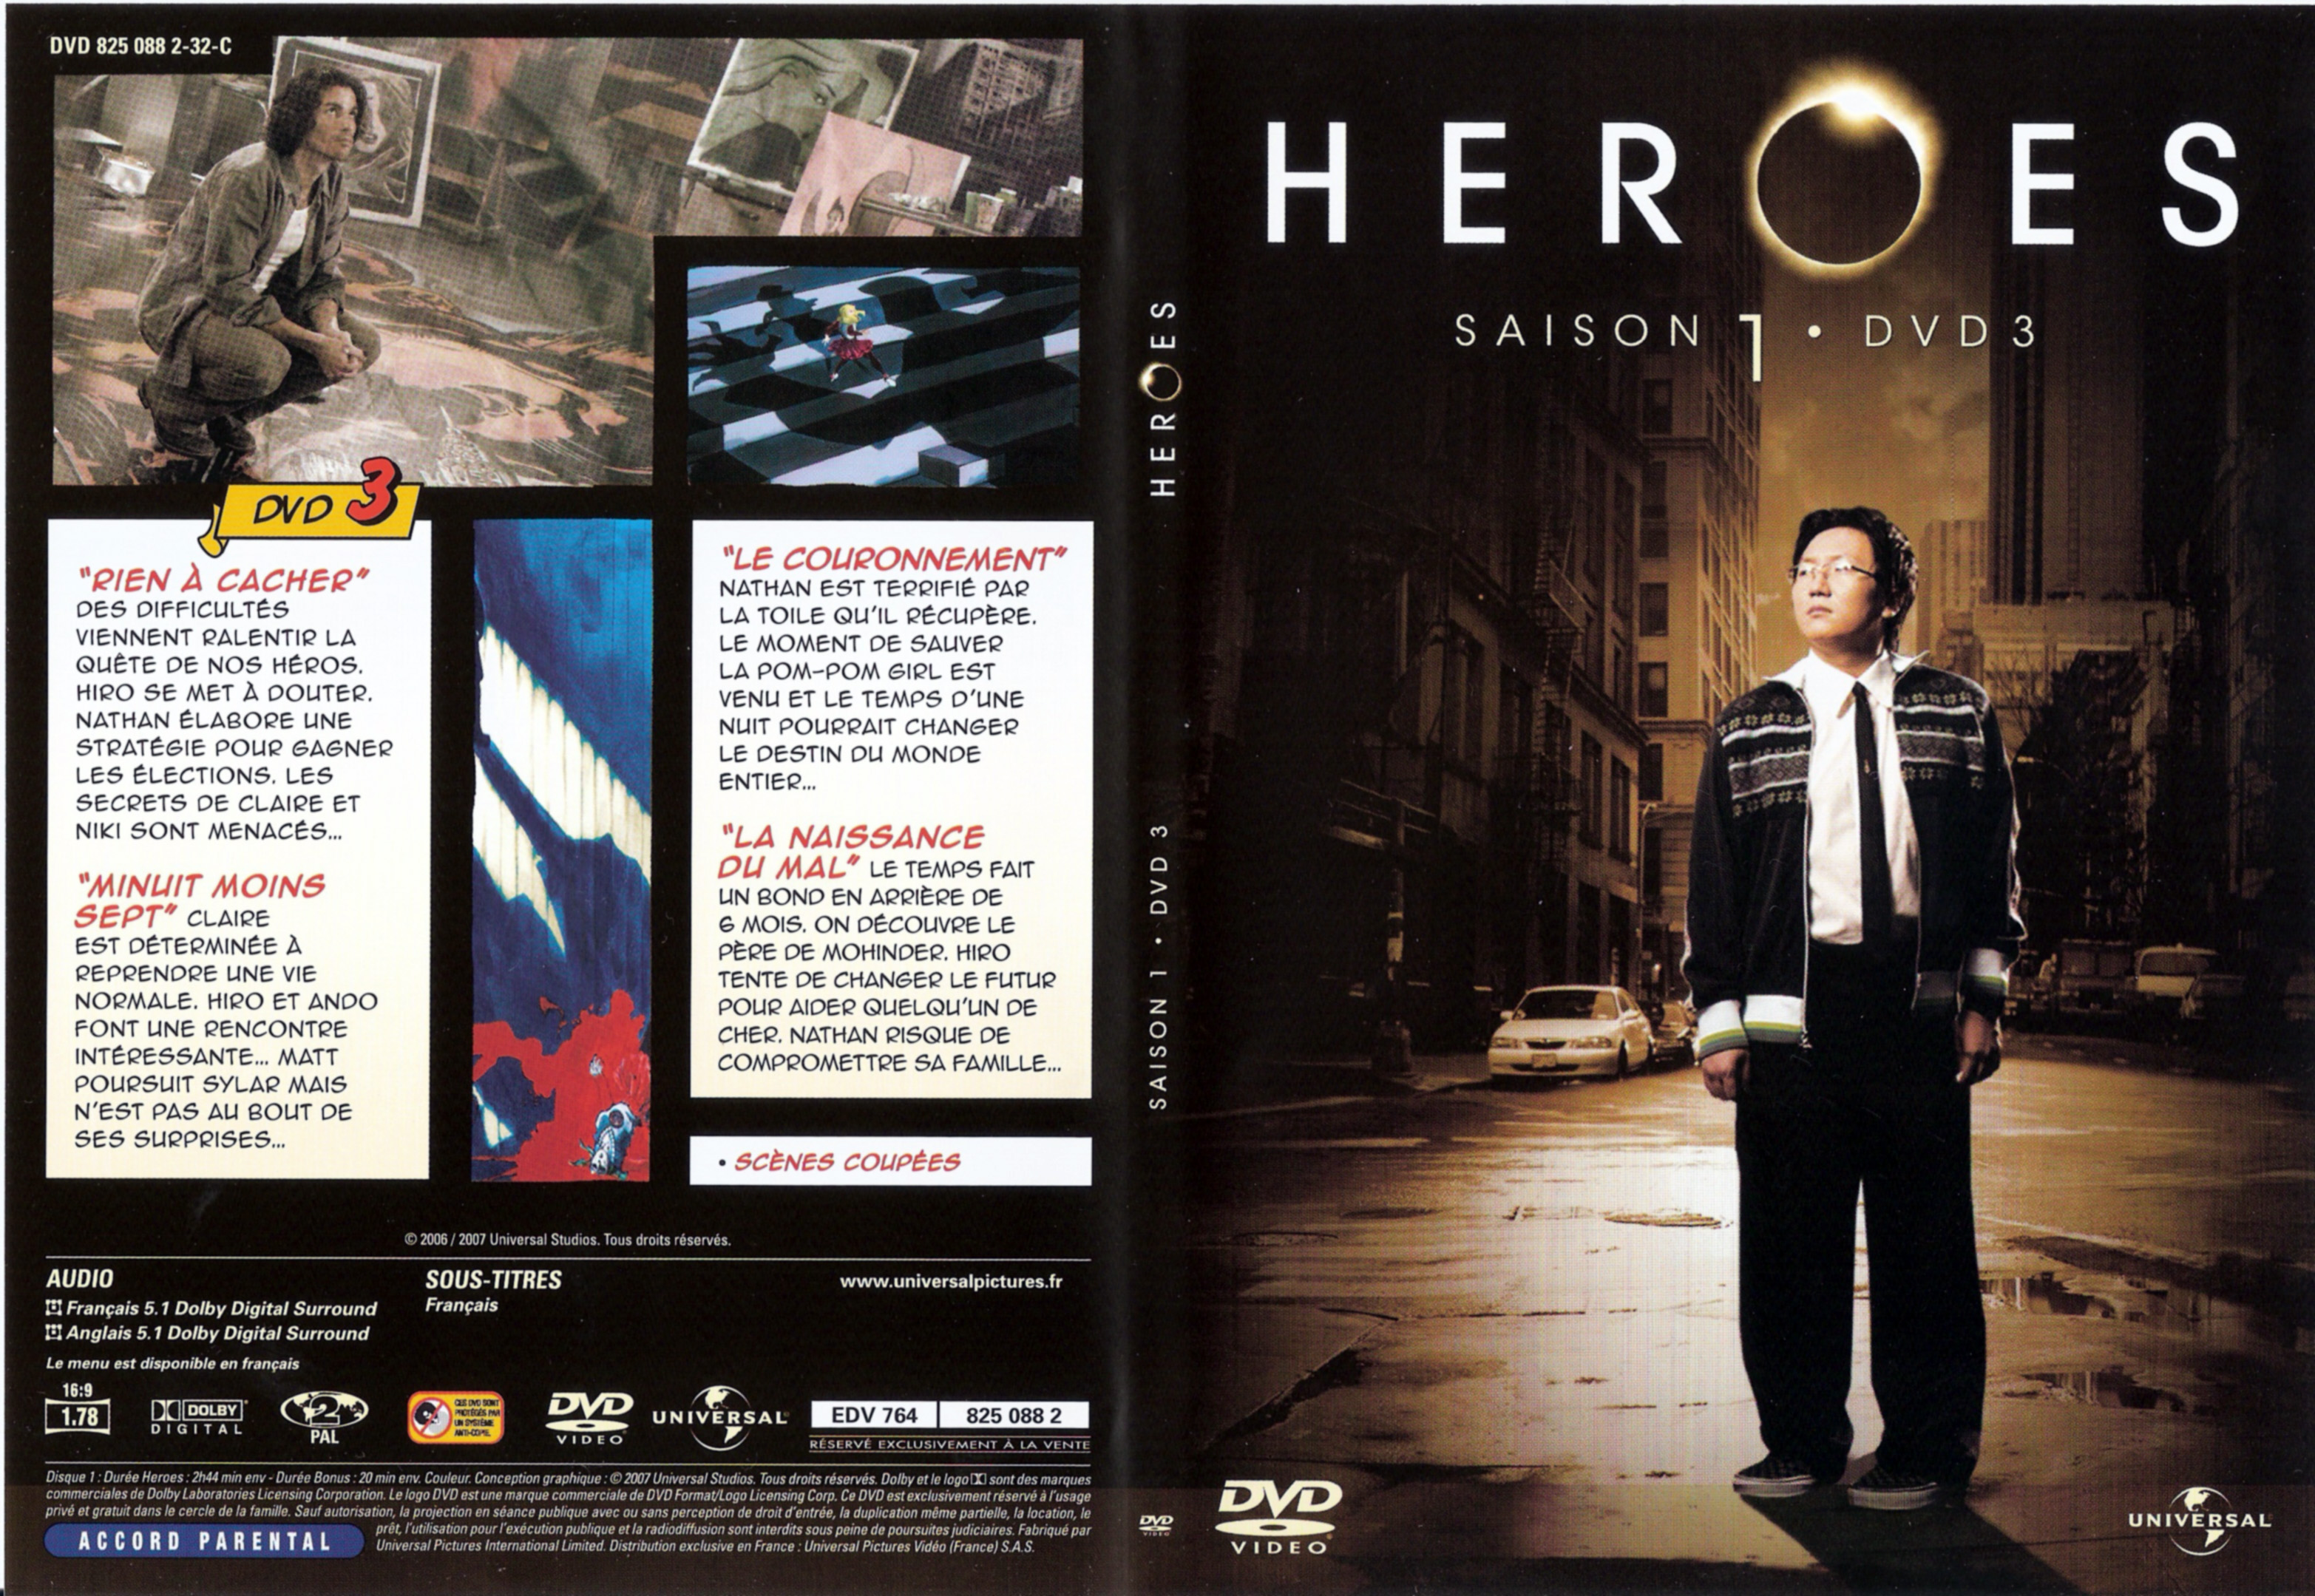 Jaquette DVD Heroes saison 1 DVD 3